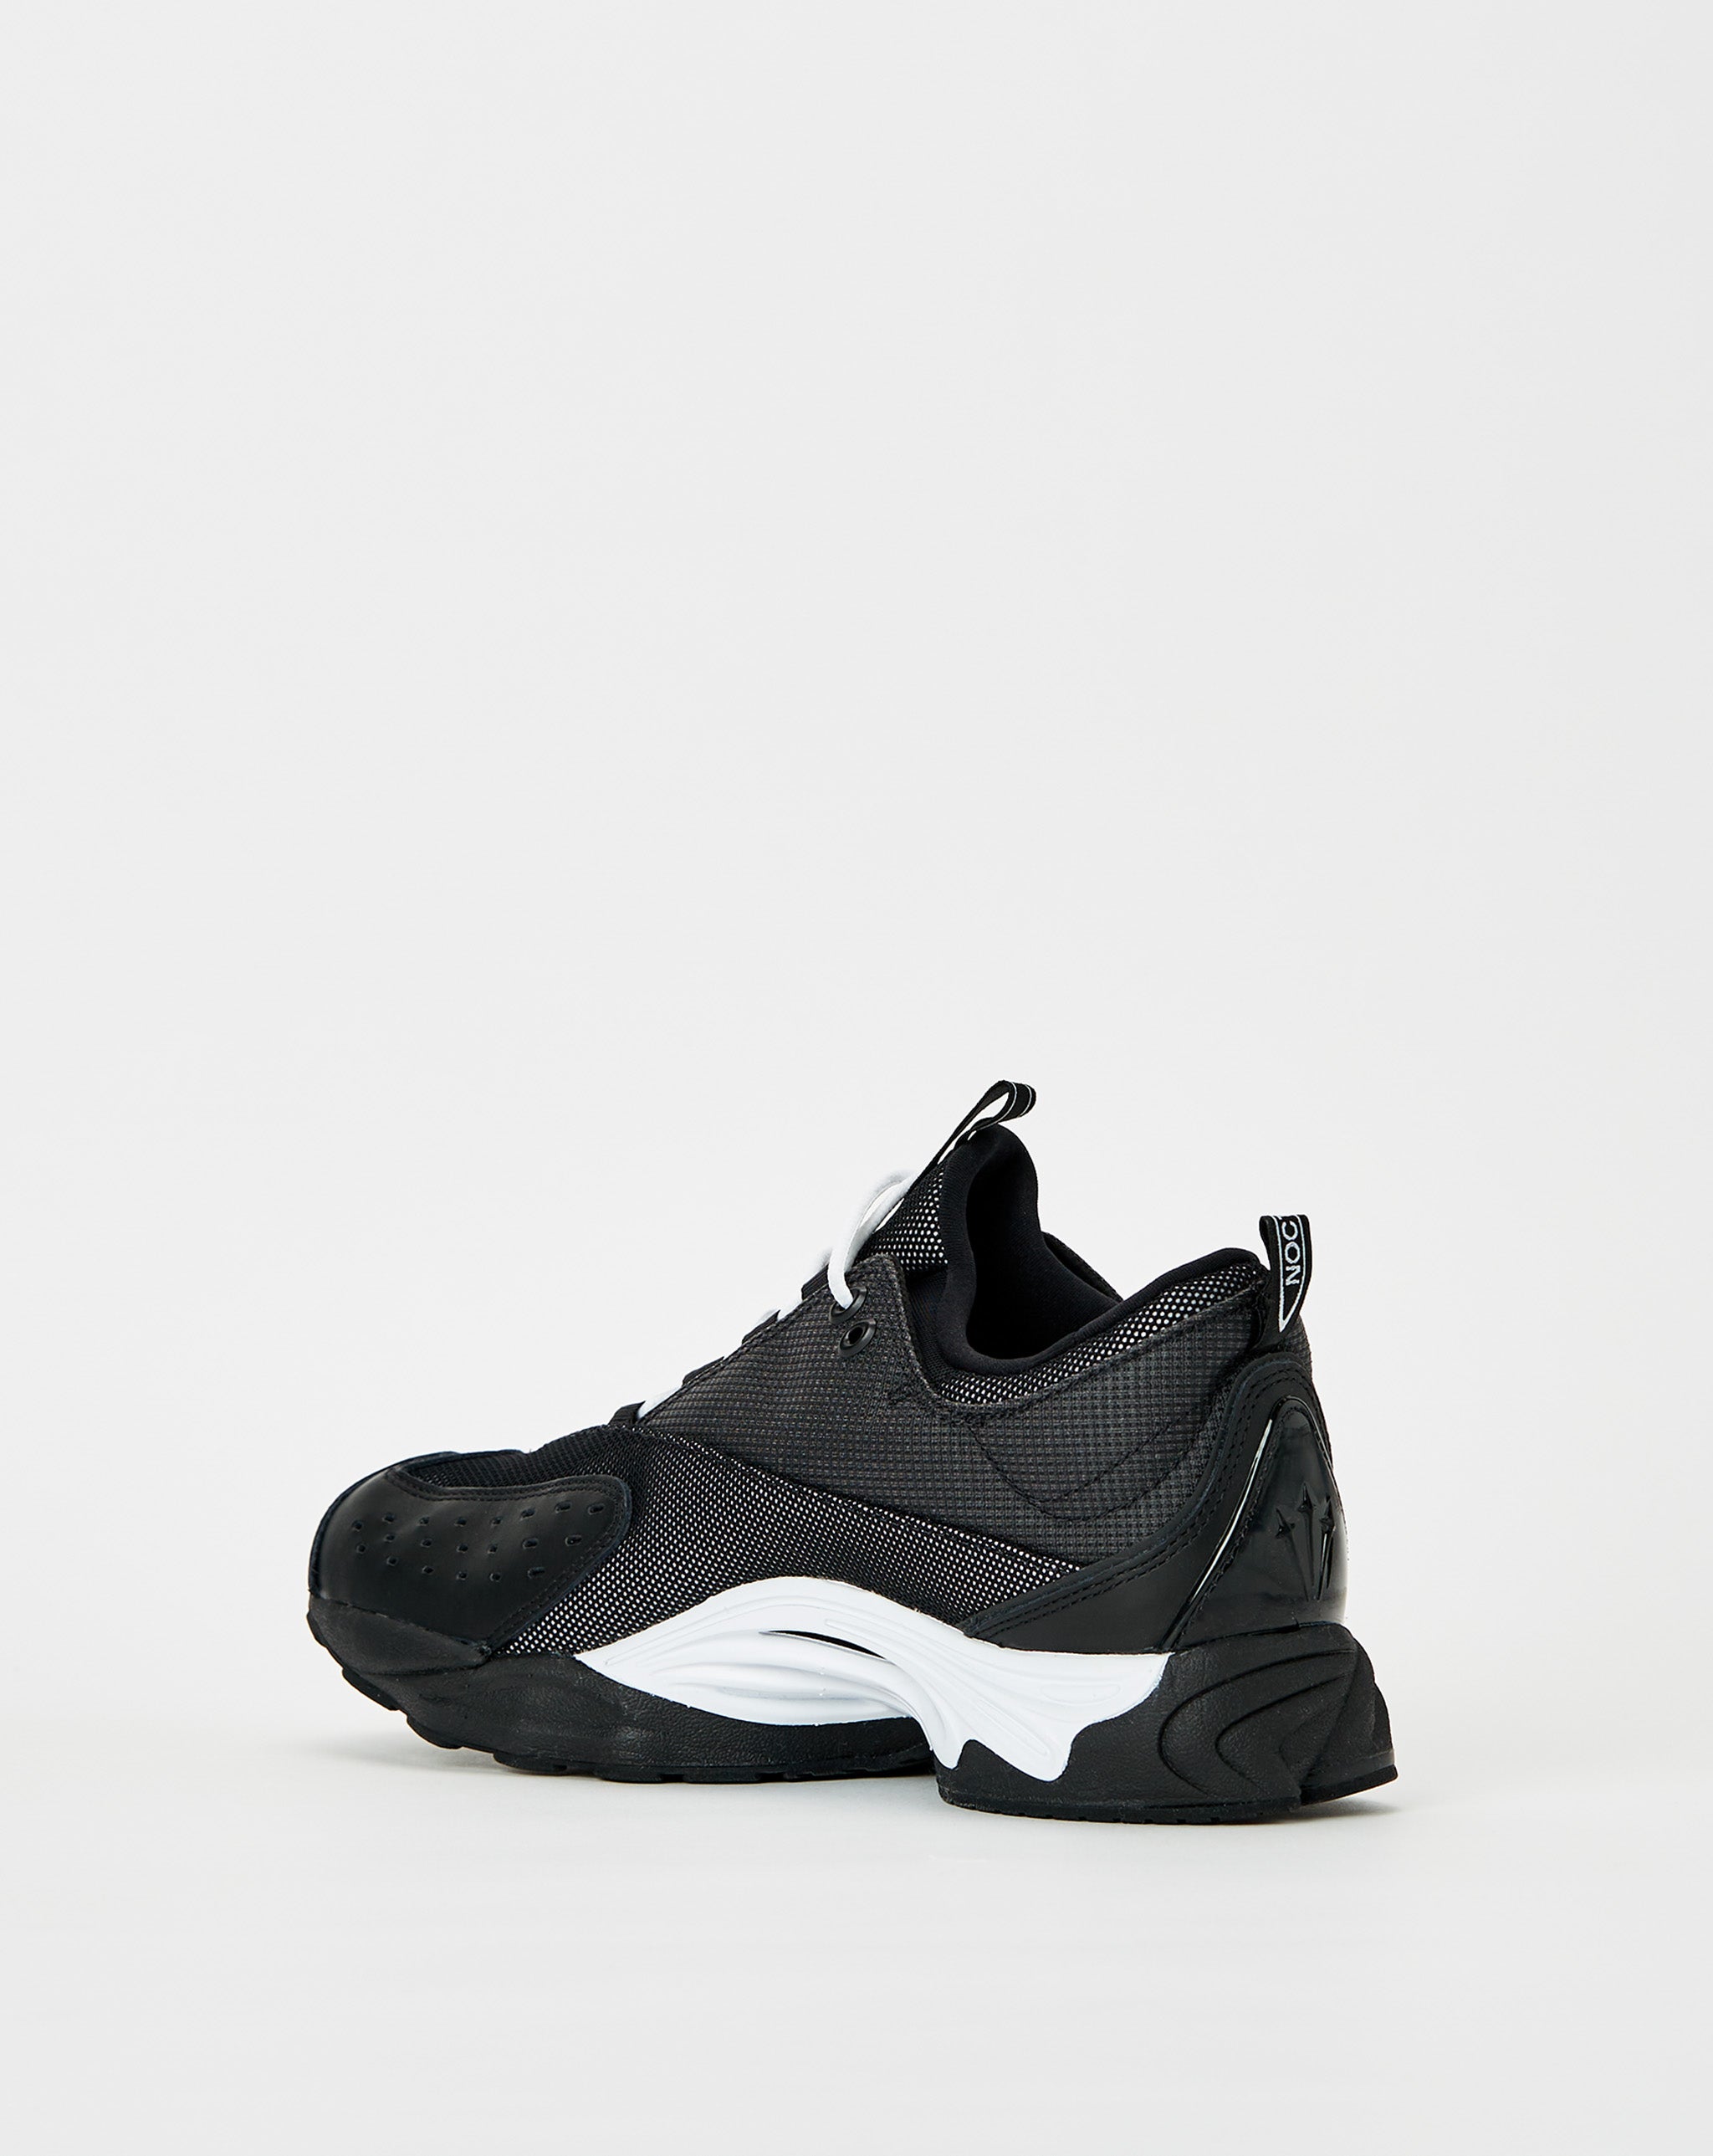 Nike nike lebron south beach 9 sneakers black friday  - Cheap Urlfreeze Jordan outlet